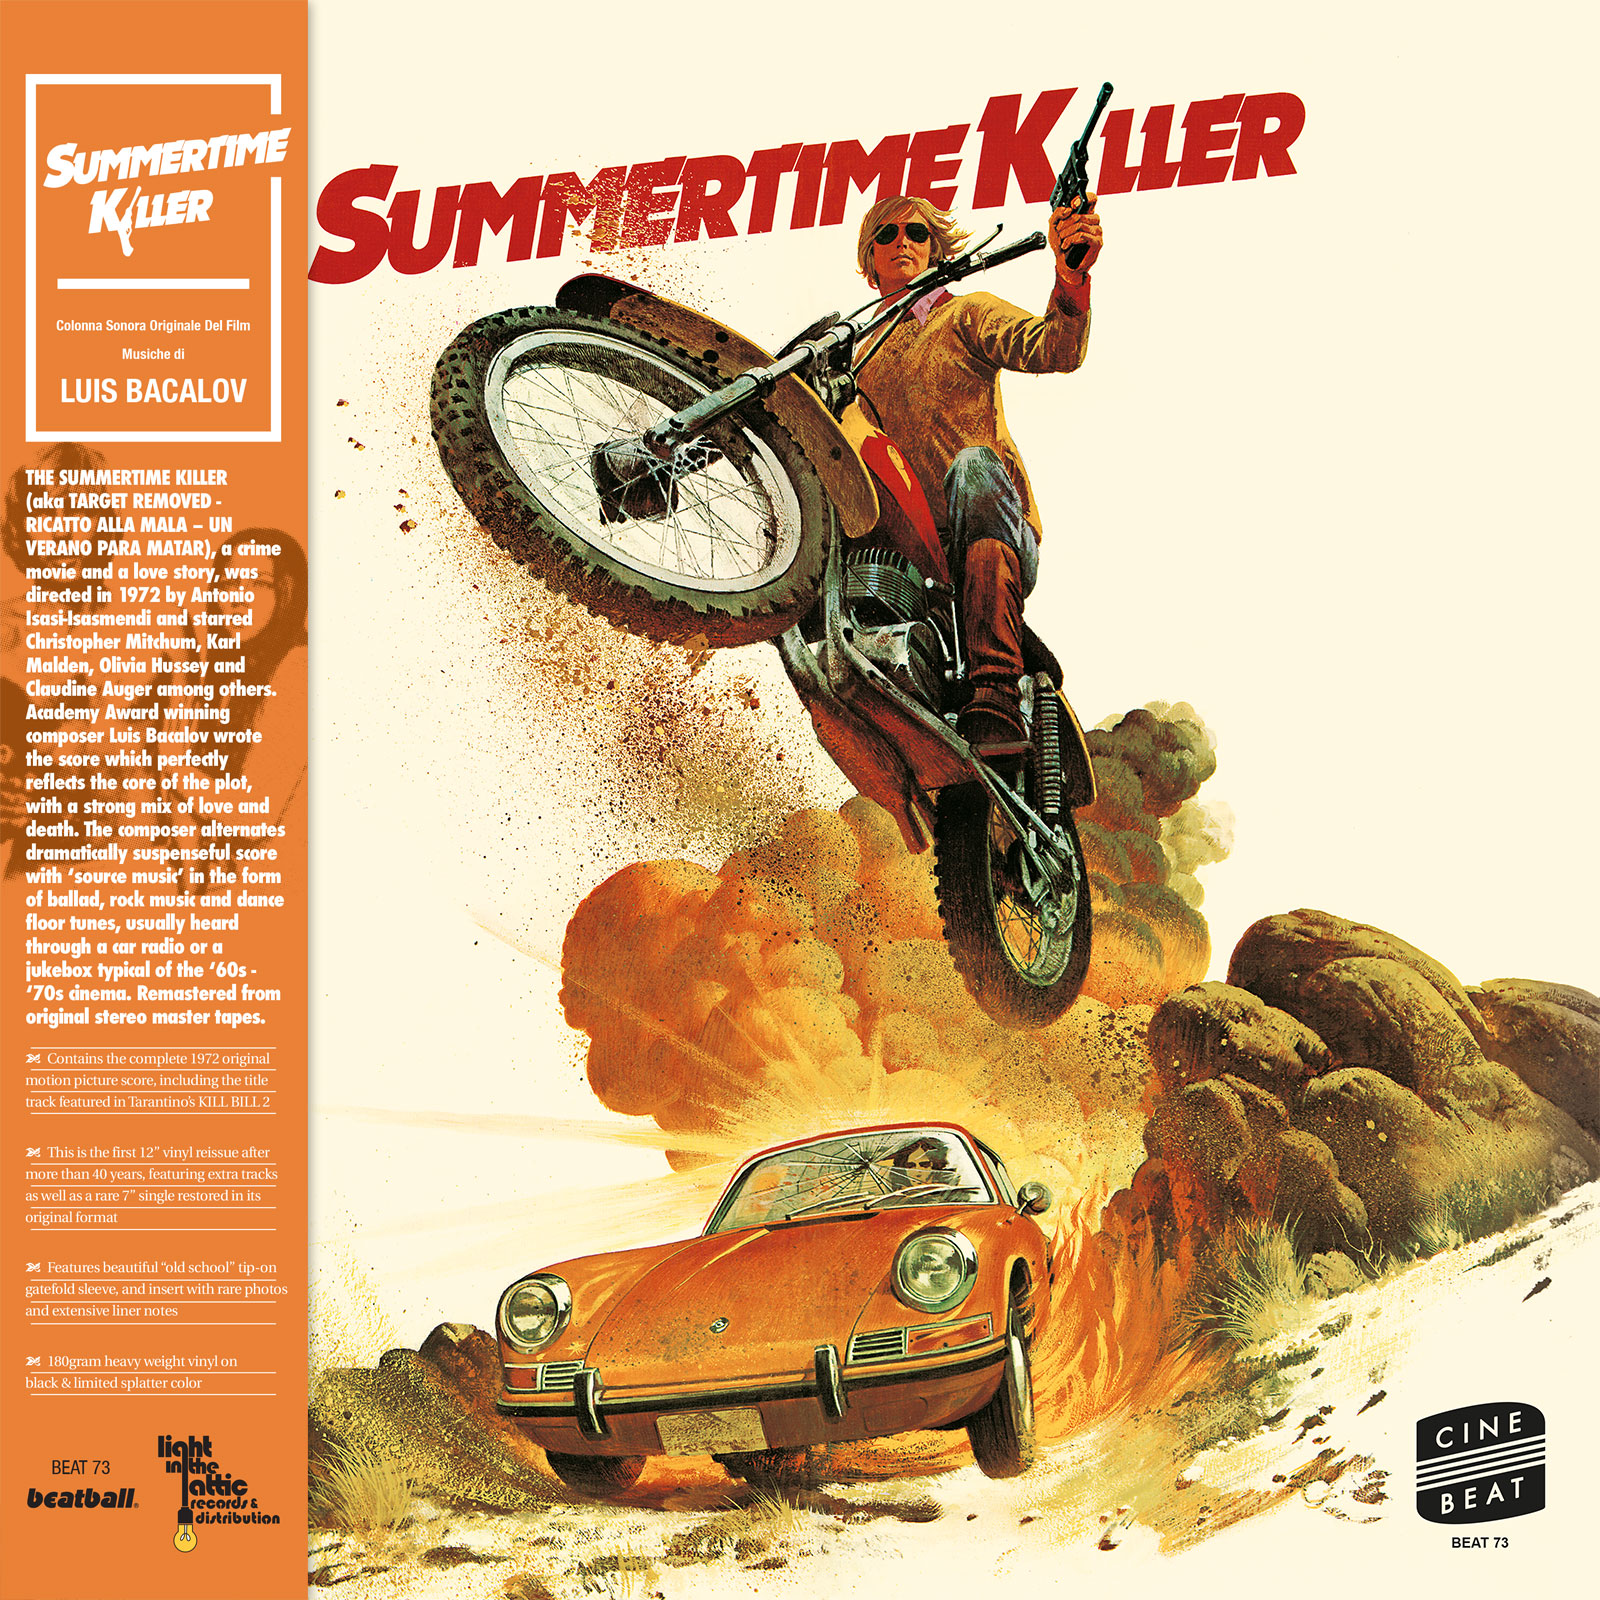 Неустаревающий OST Луиса Бакалова к ленте Антонио Исаси-Исасменди "Summertime Killer" был переиздан на виниле